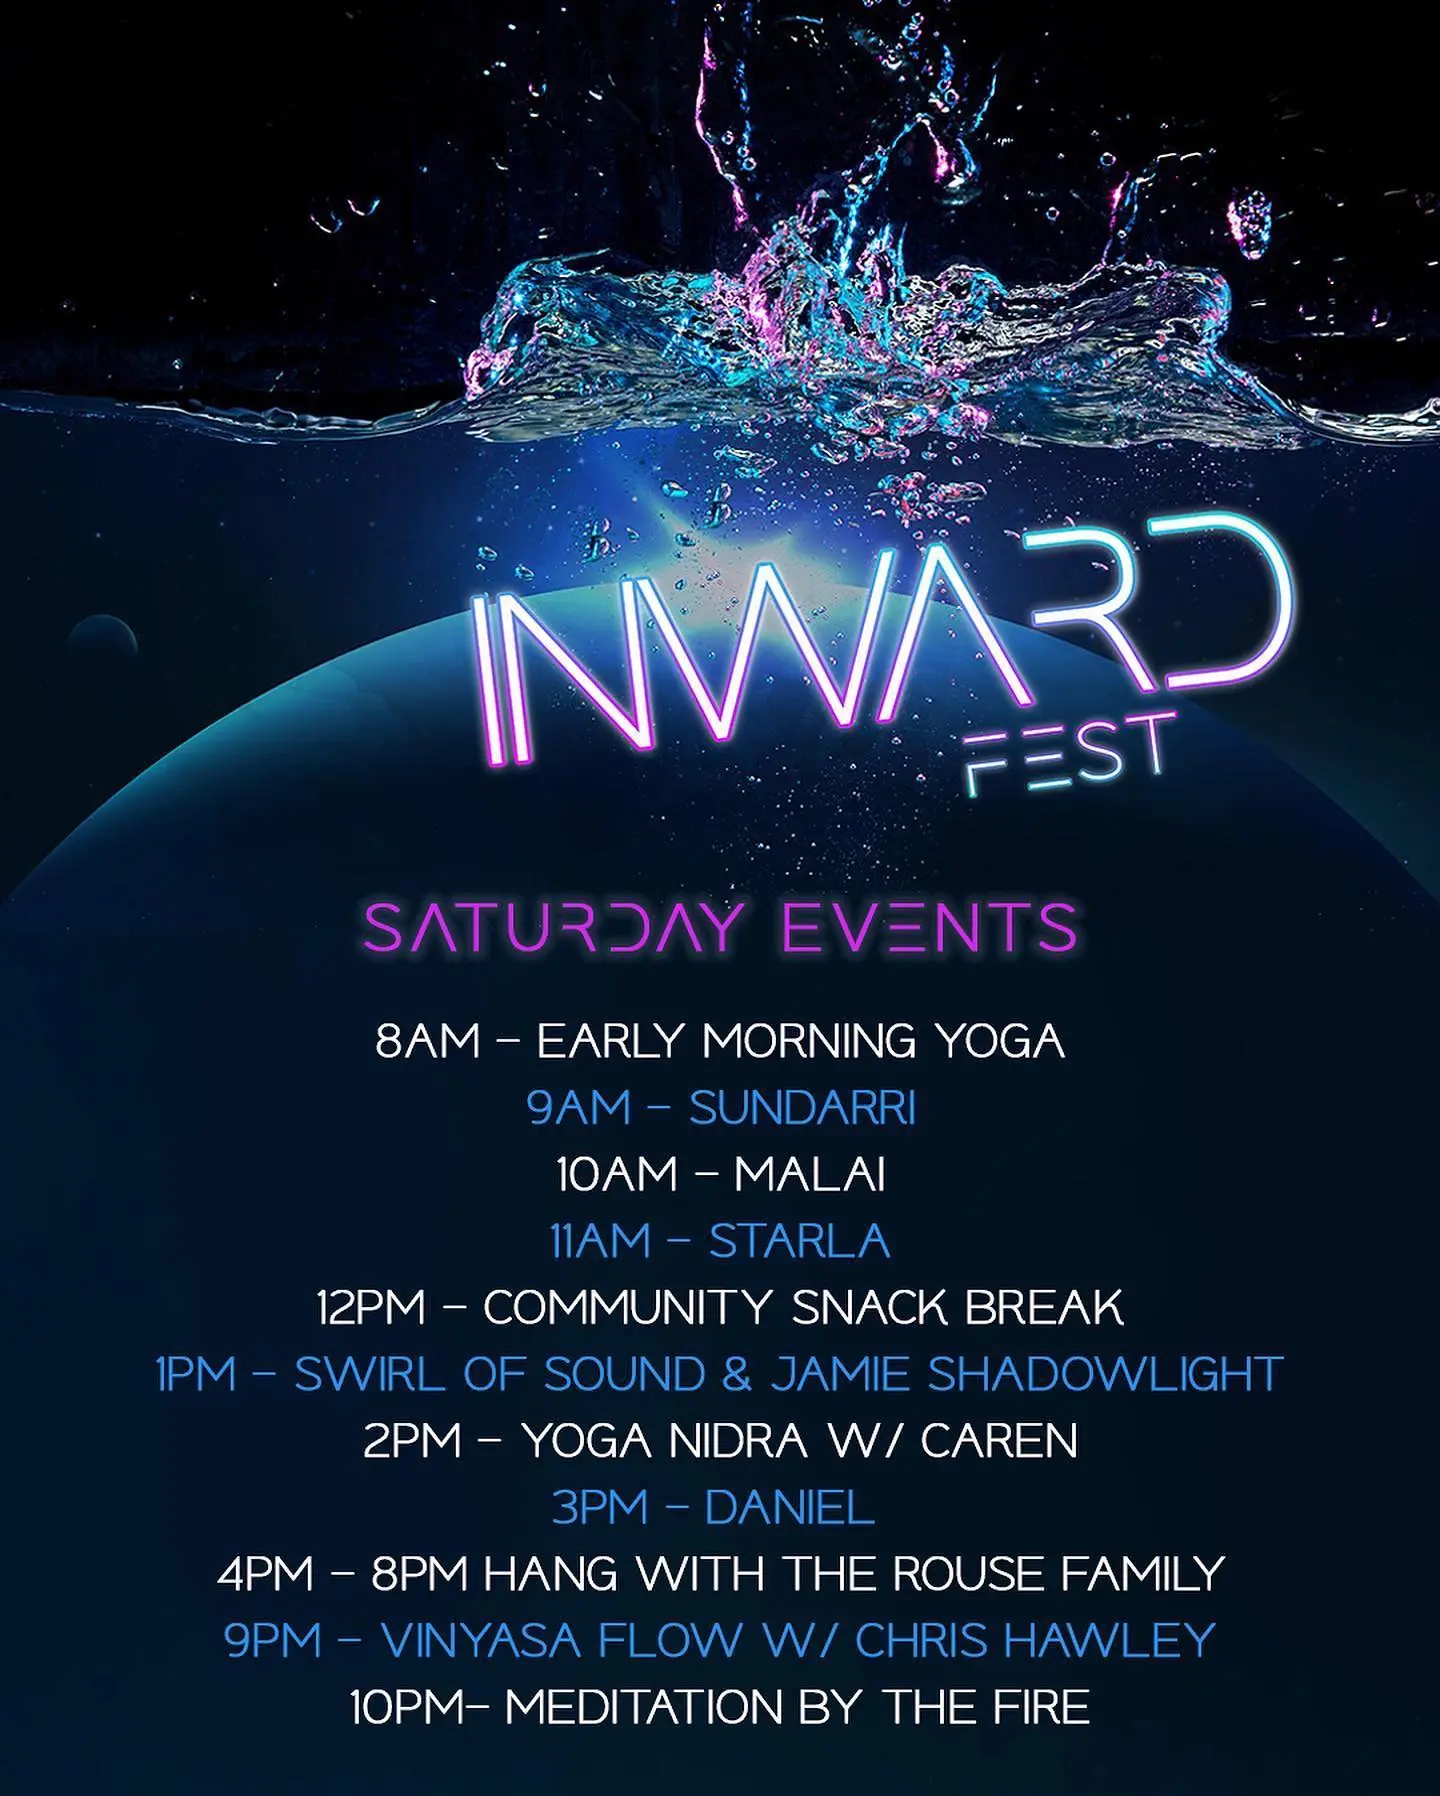 Inward Fest Saturday Set Times